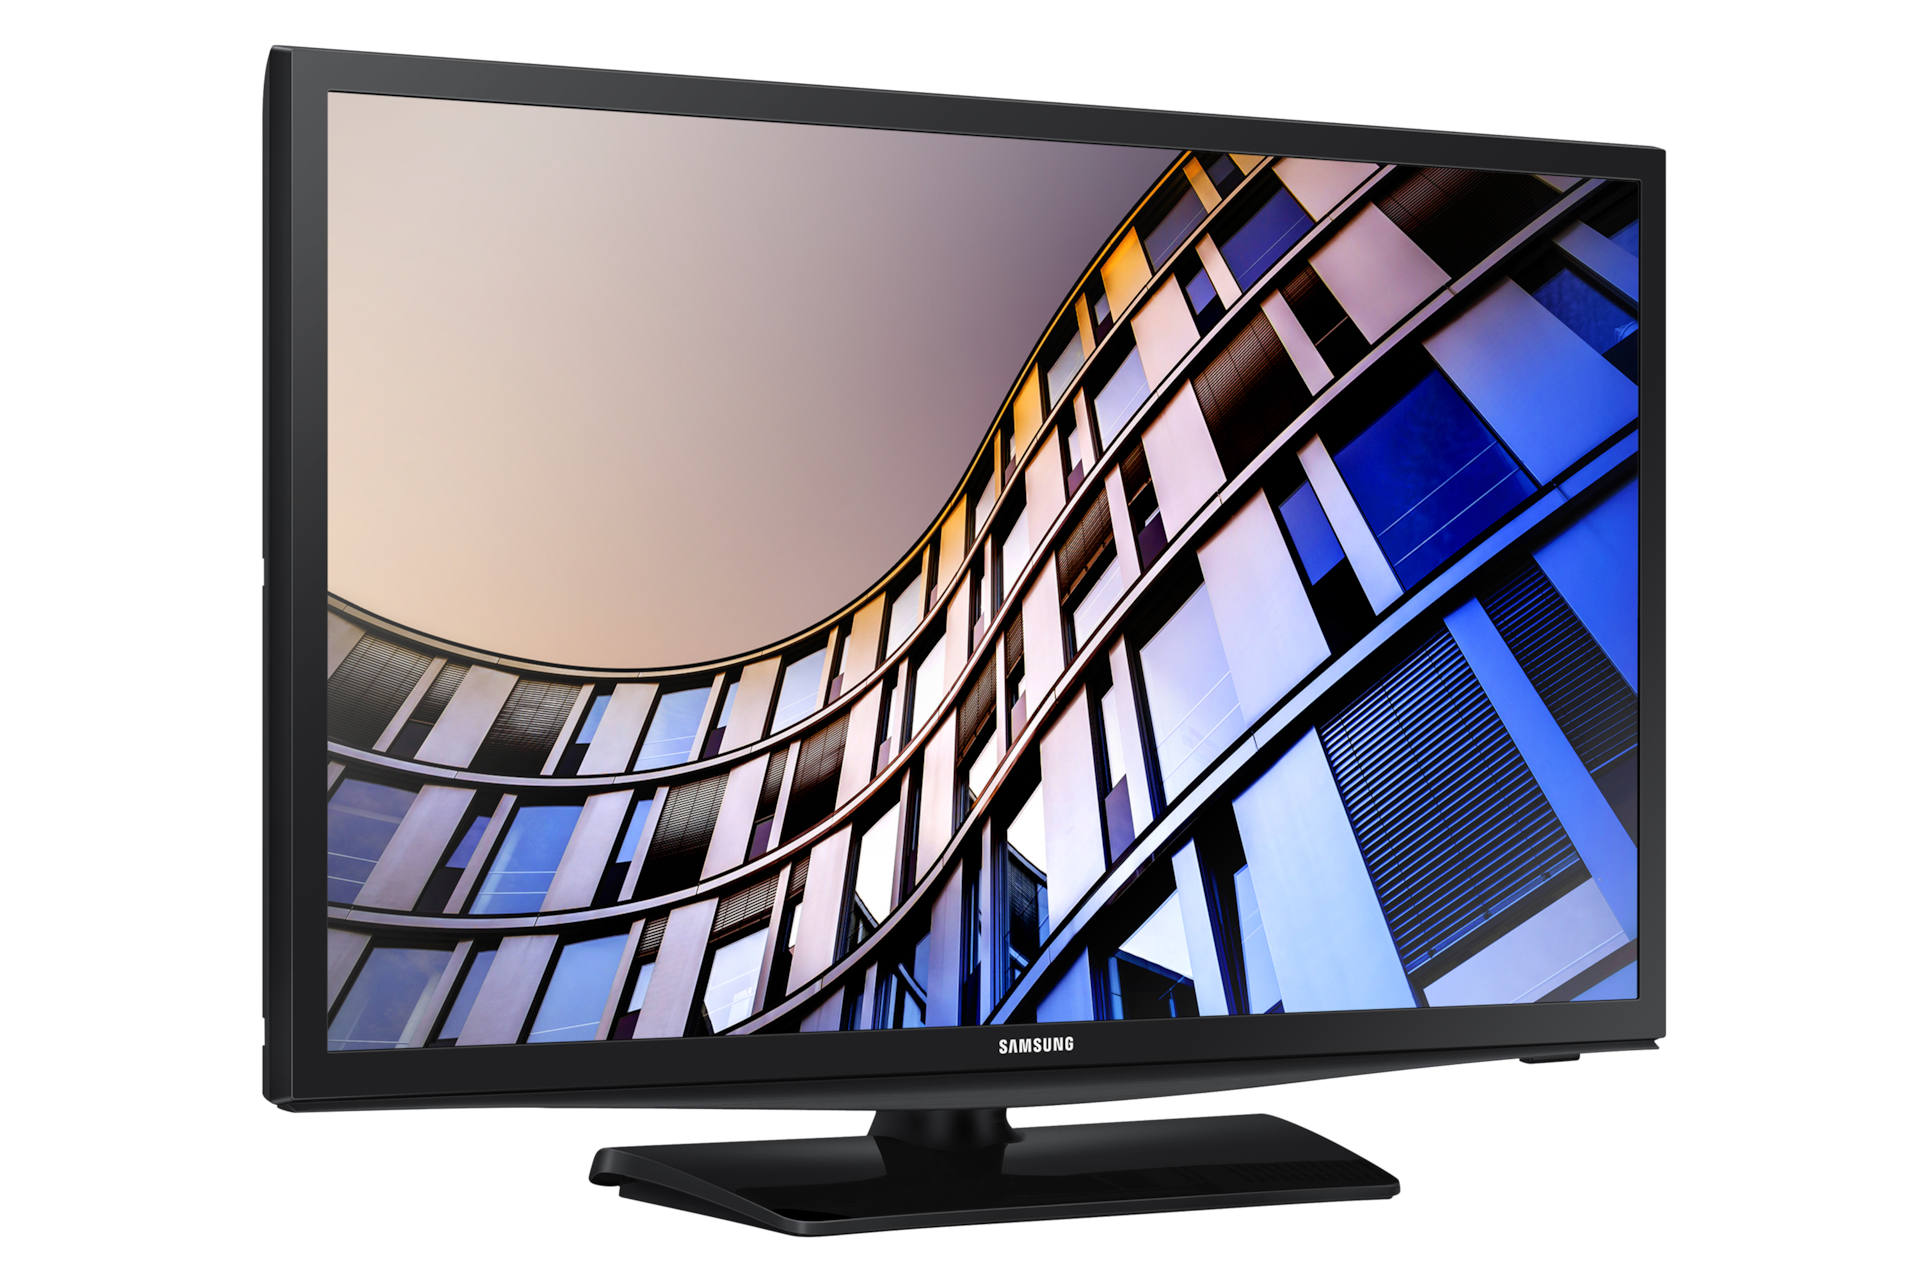 TV Samsung N4305 LED HD Ready 24 60 cm Smart TV, Samsung españa